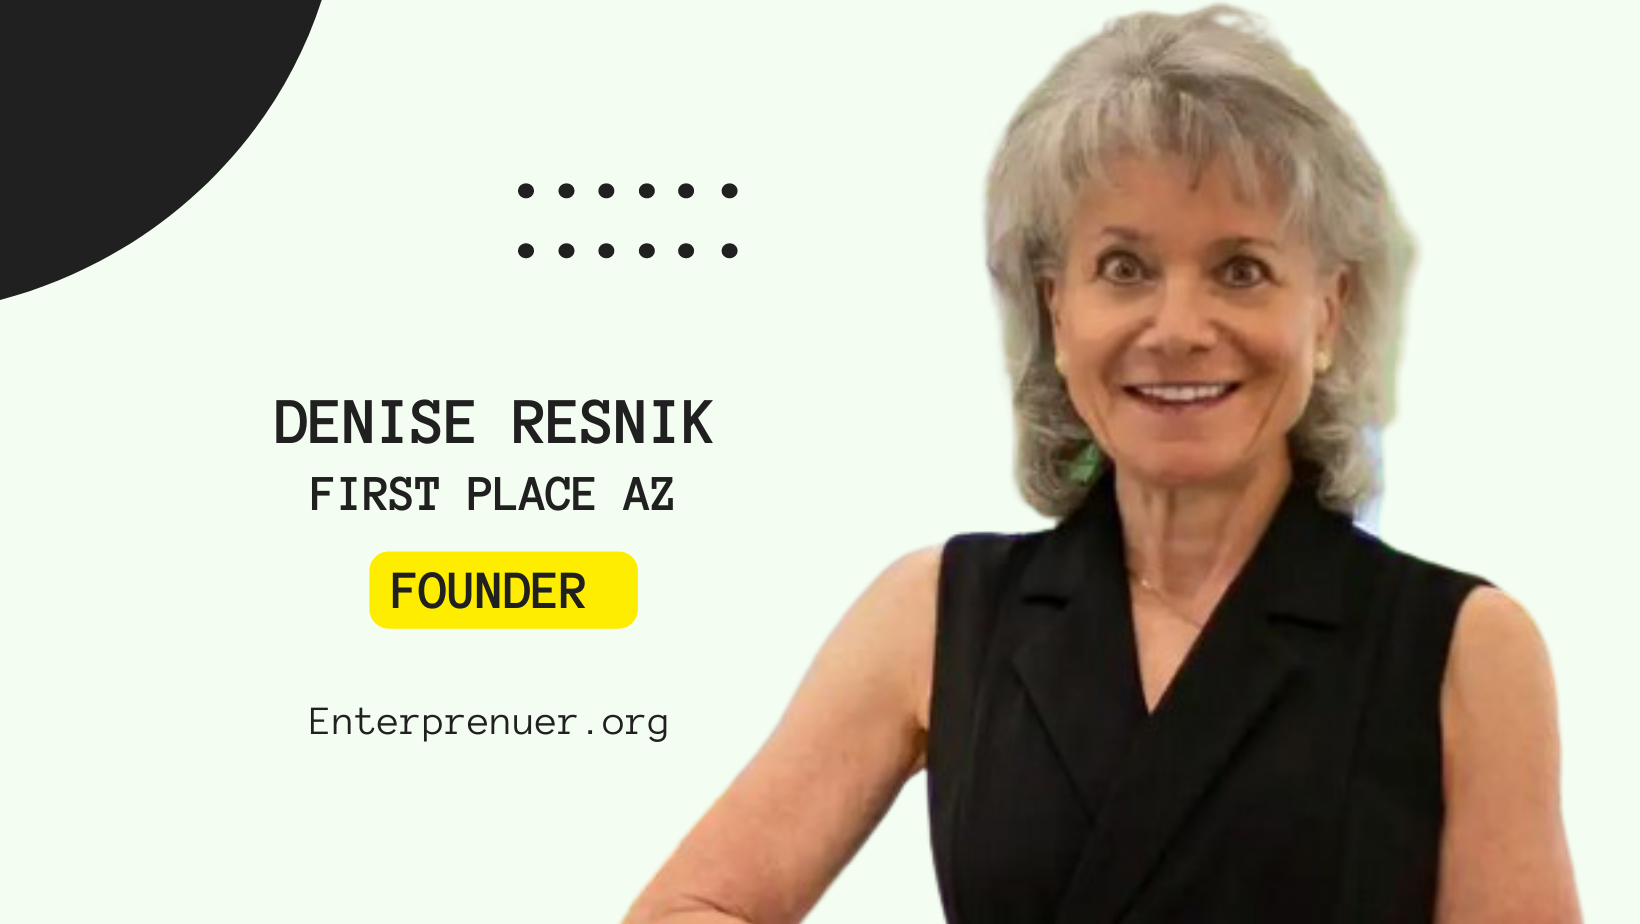 Denise Resnik Founder of First Place AZ